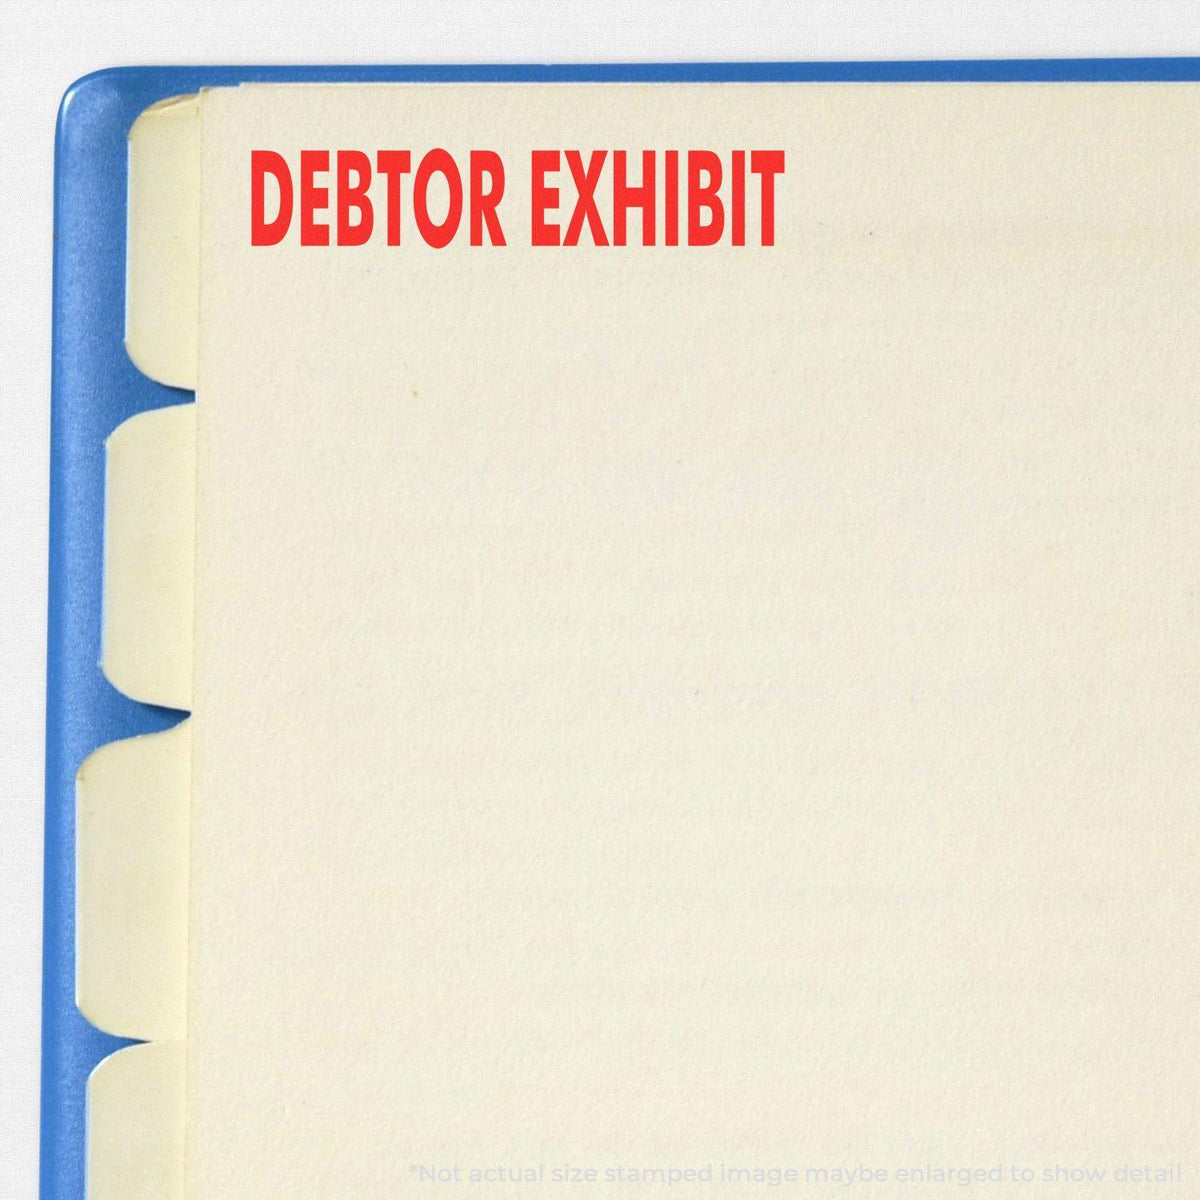 In Use Large Pre Inked Debtor Exhibit Stamp Image